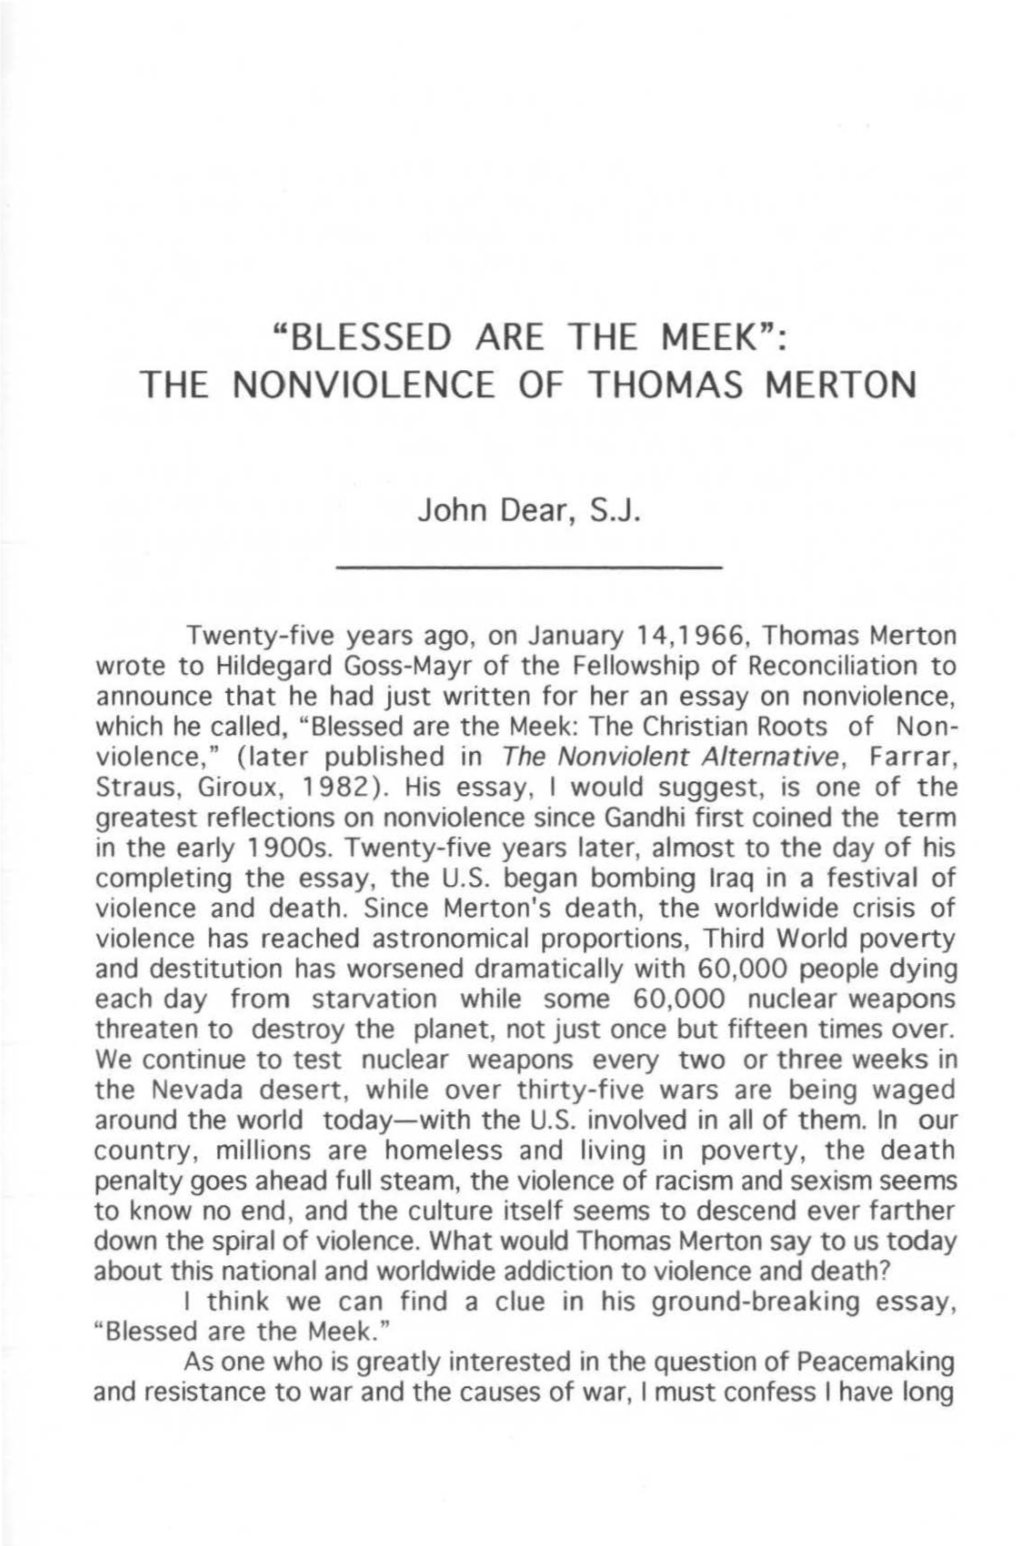 The Nonviolence of Thomas Merton